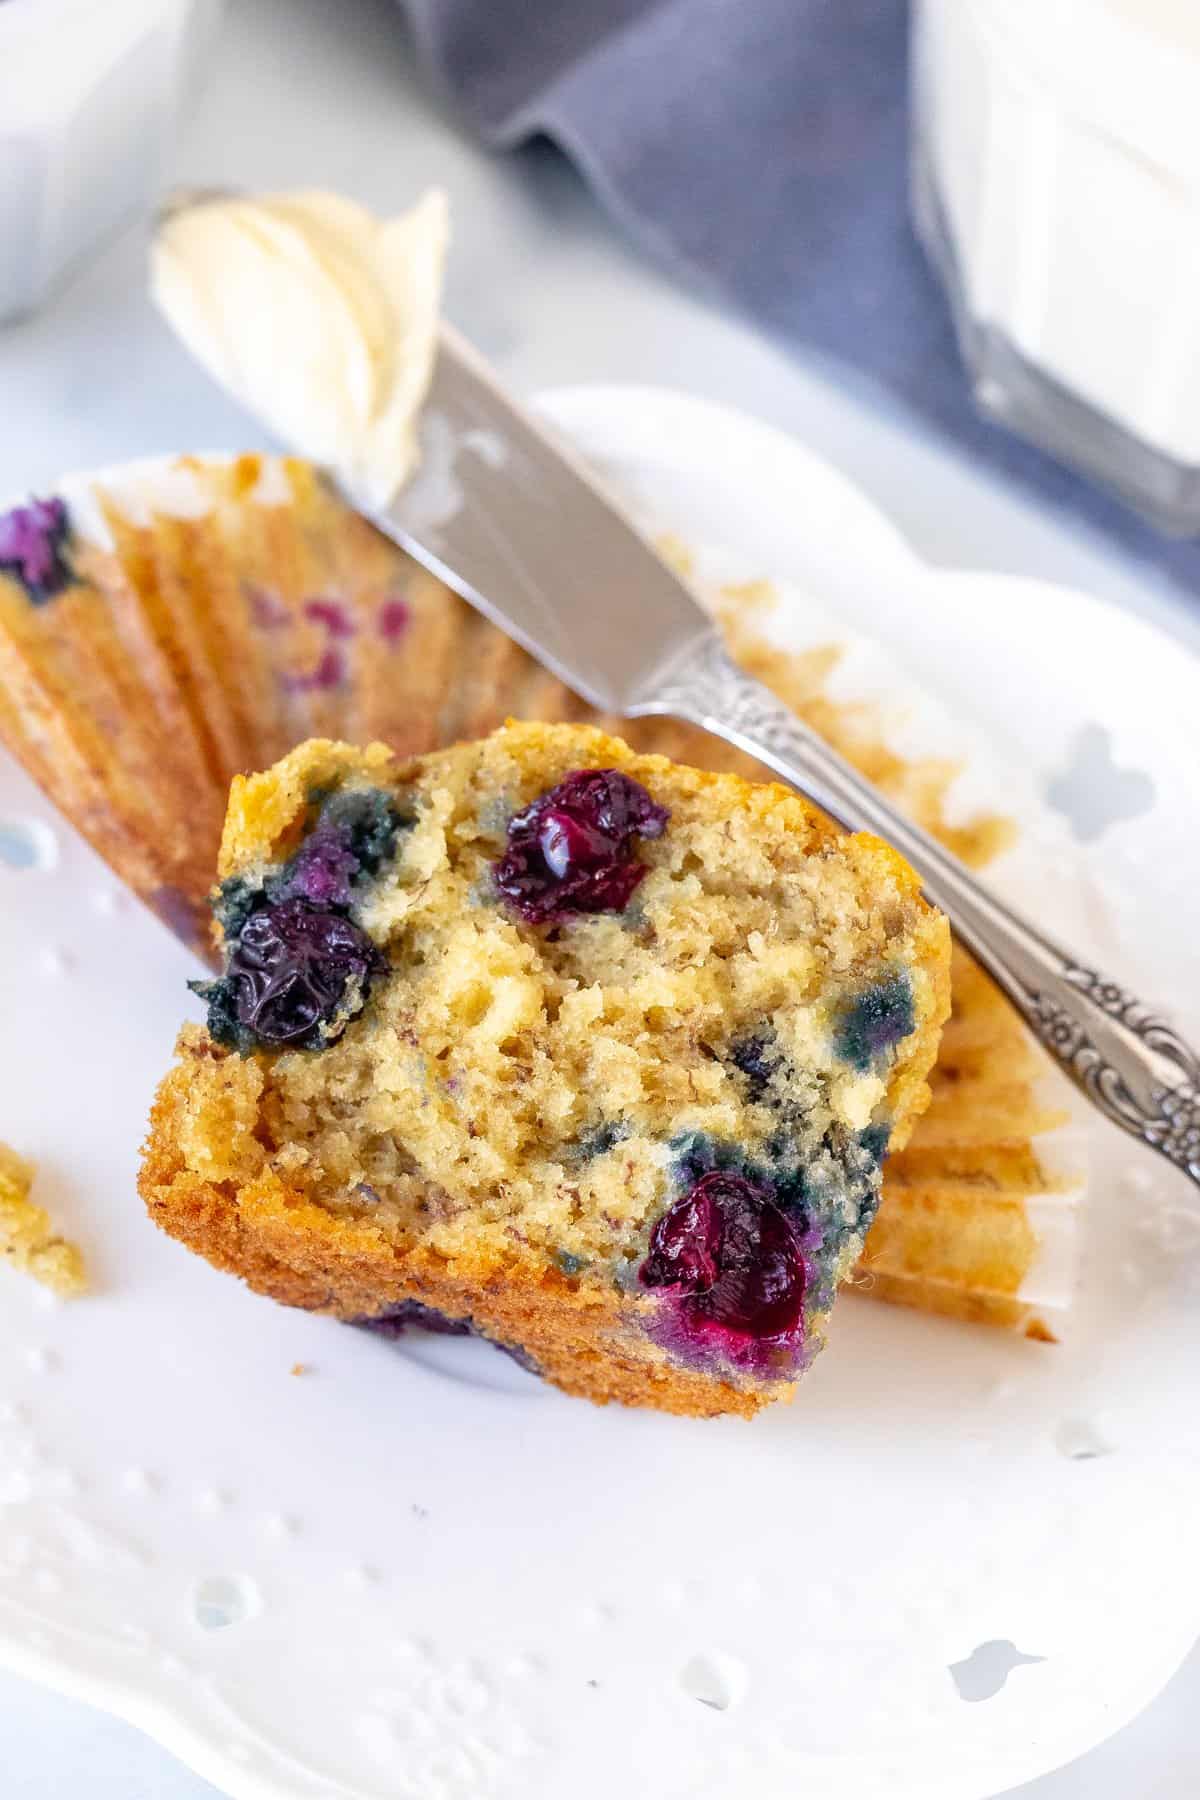 Banana muffin with blueberries broken in half